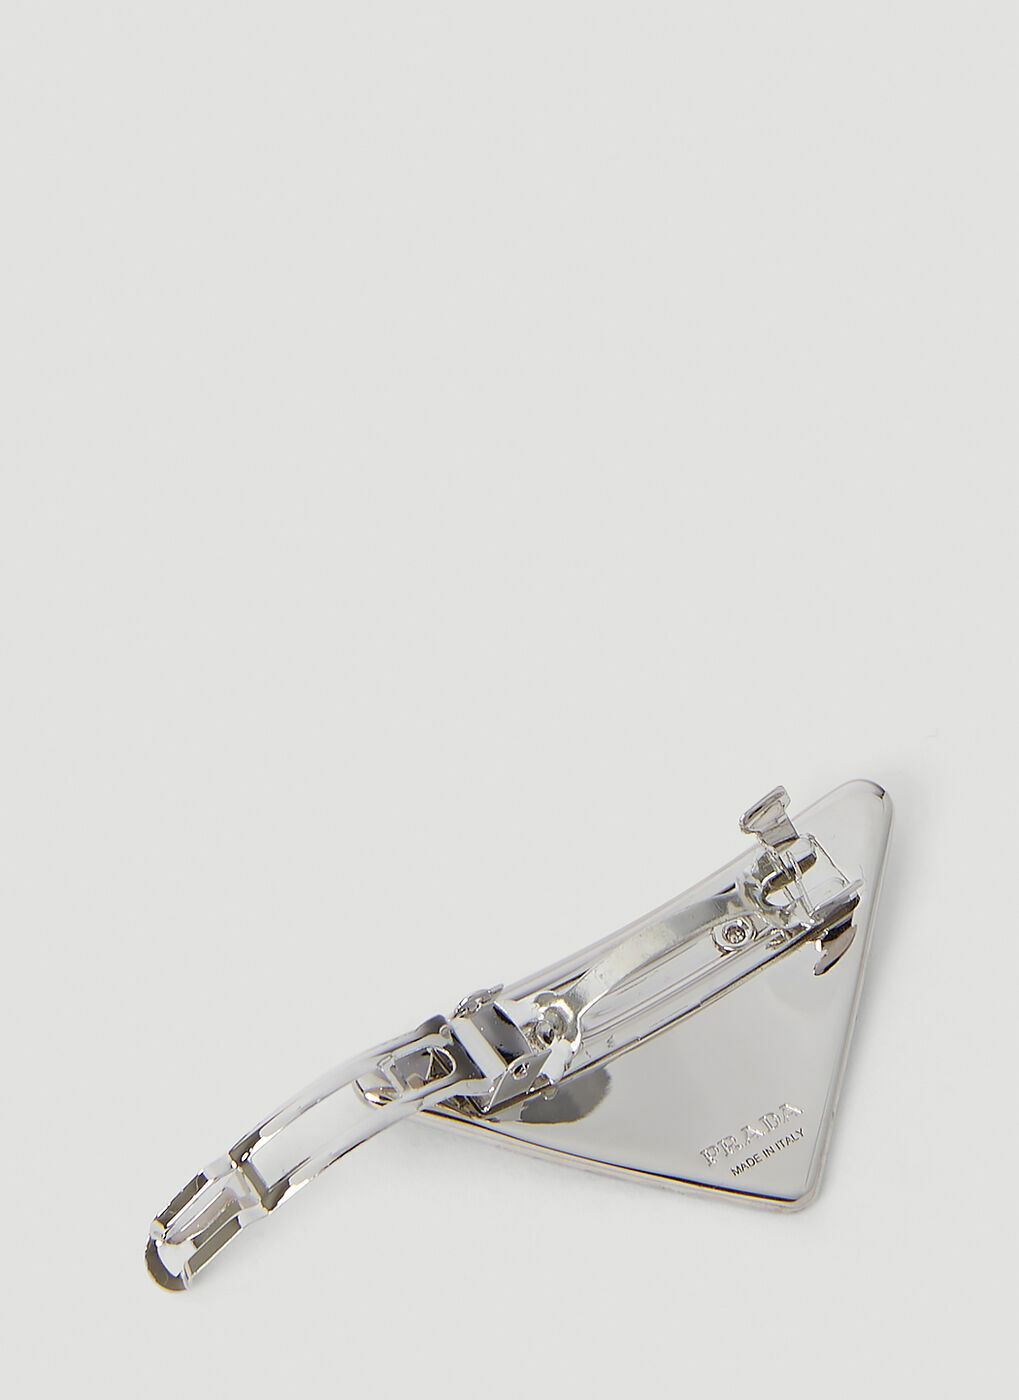 Prada Logo Plaque Hair Clip in Metallic